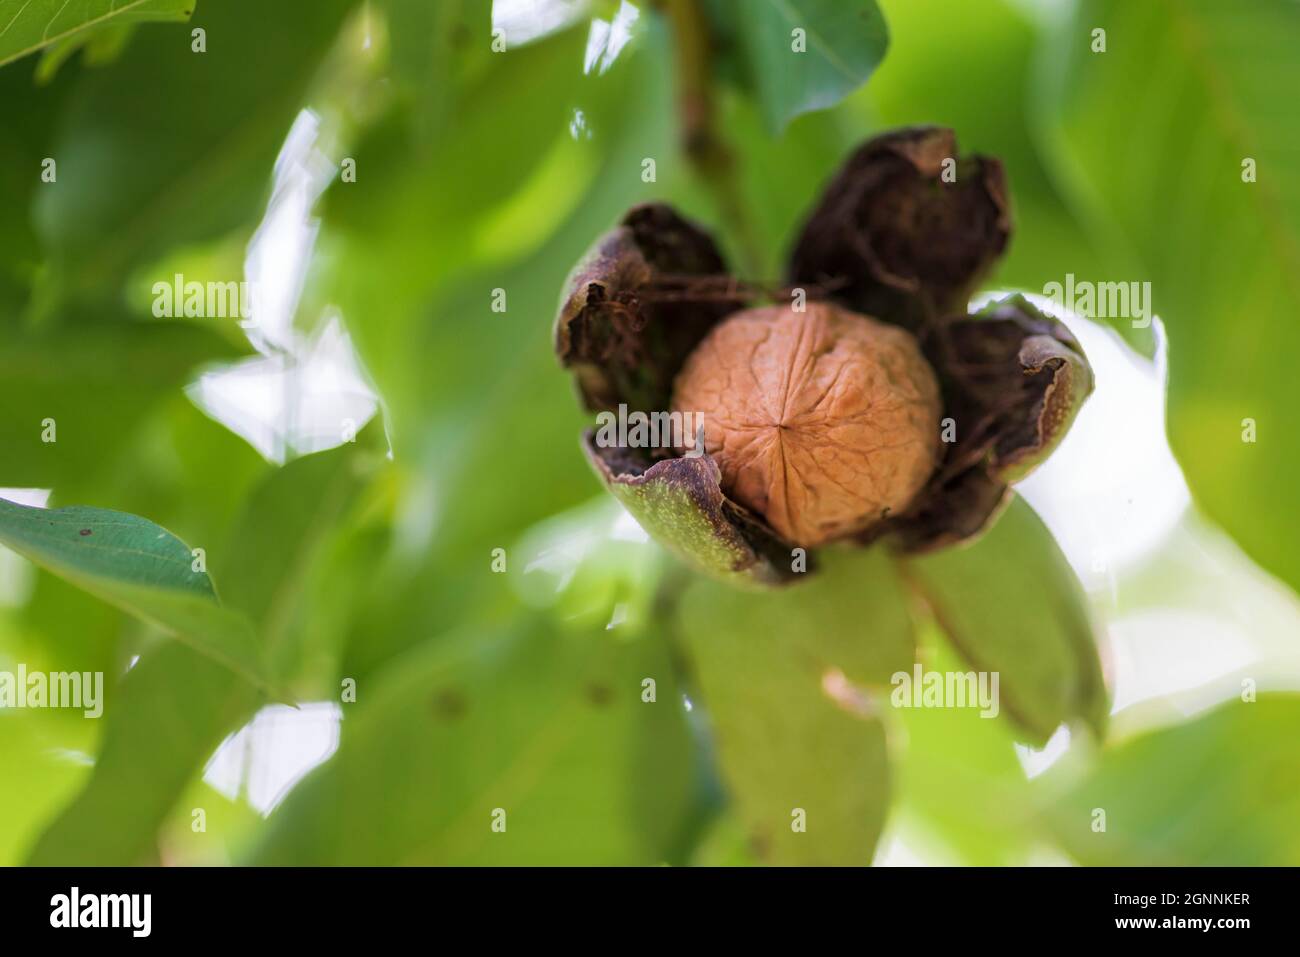 ripe walnut in open green shell on tree branch by late summer Stock Photo